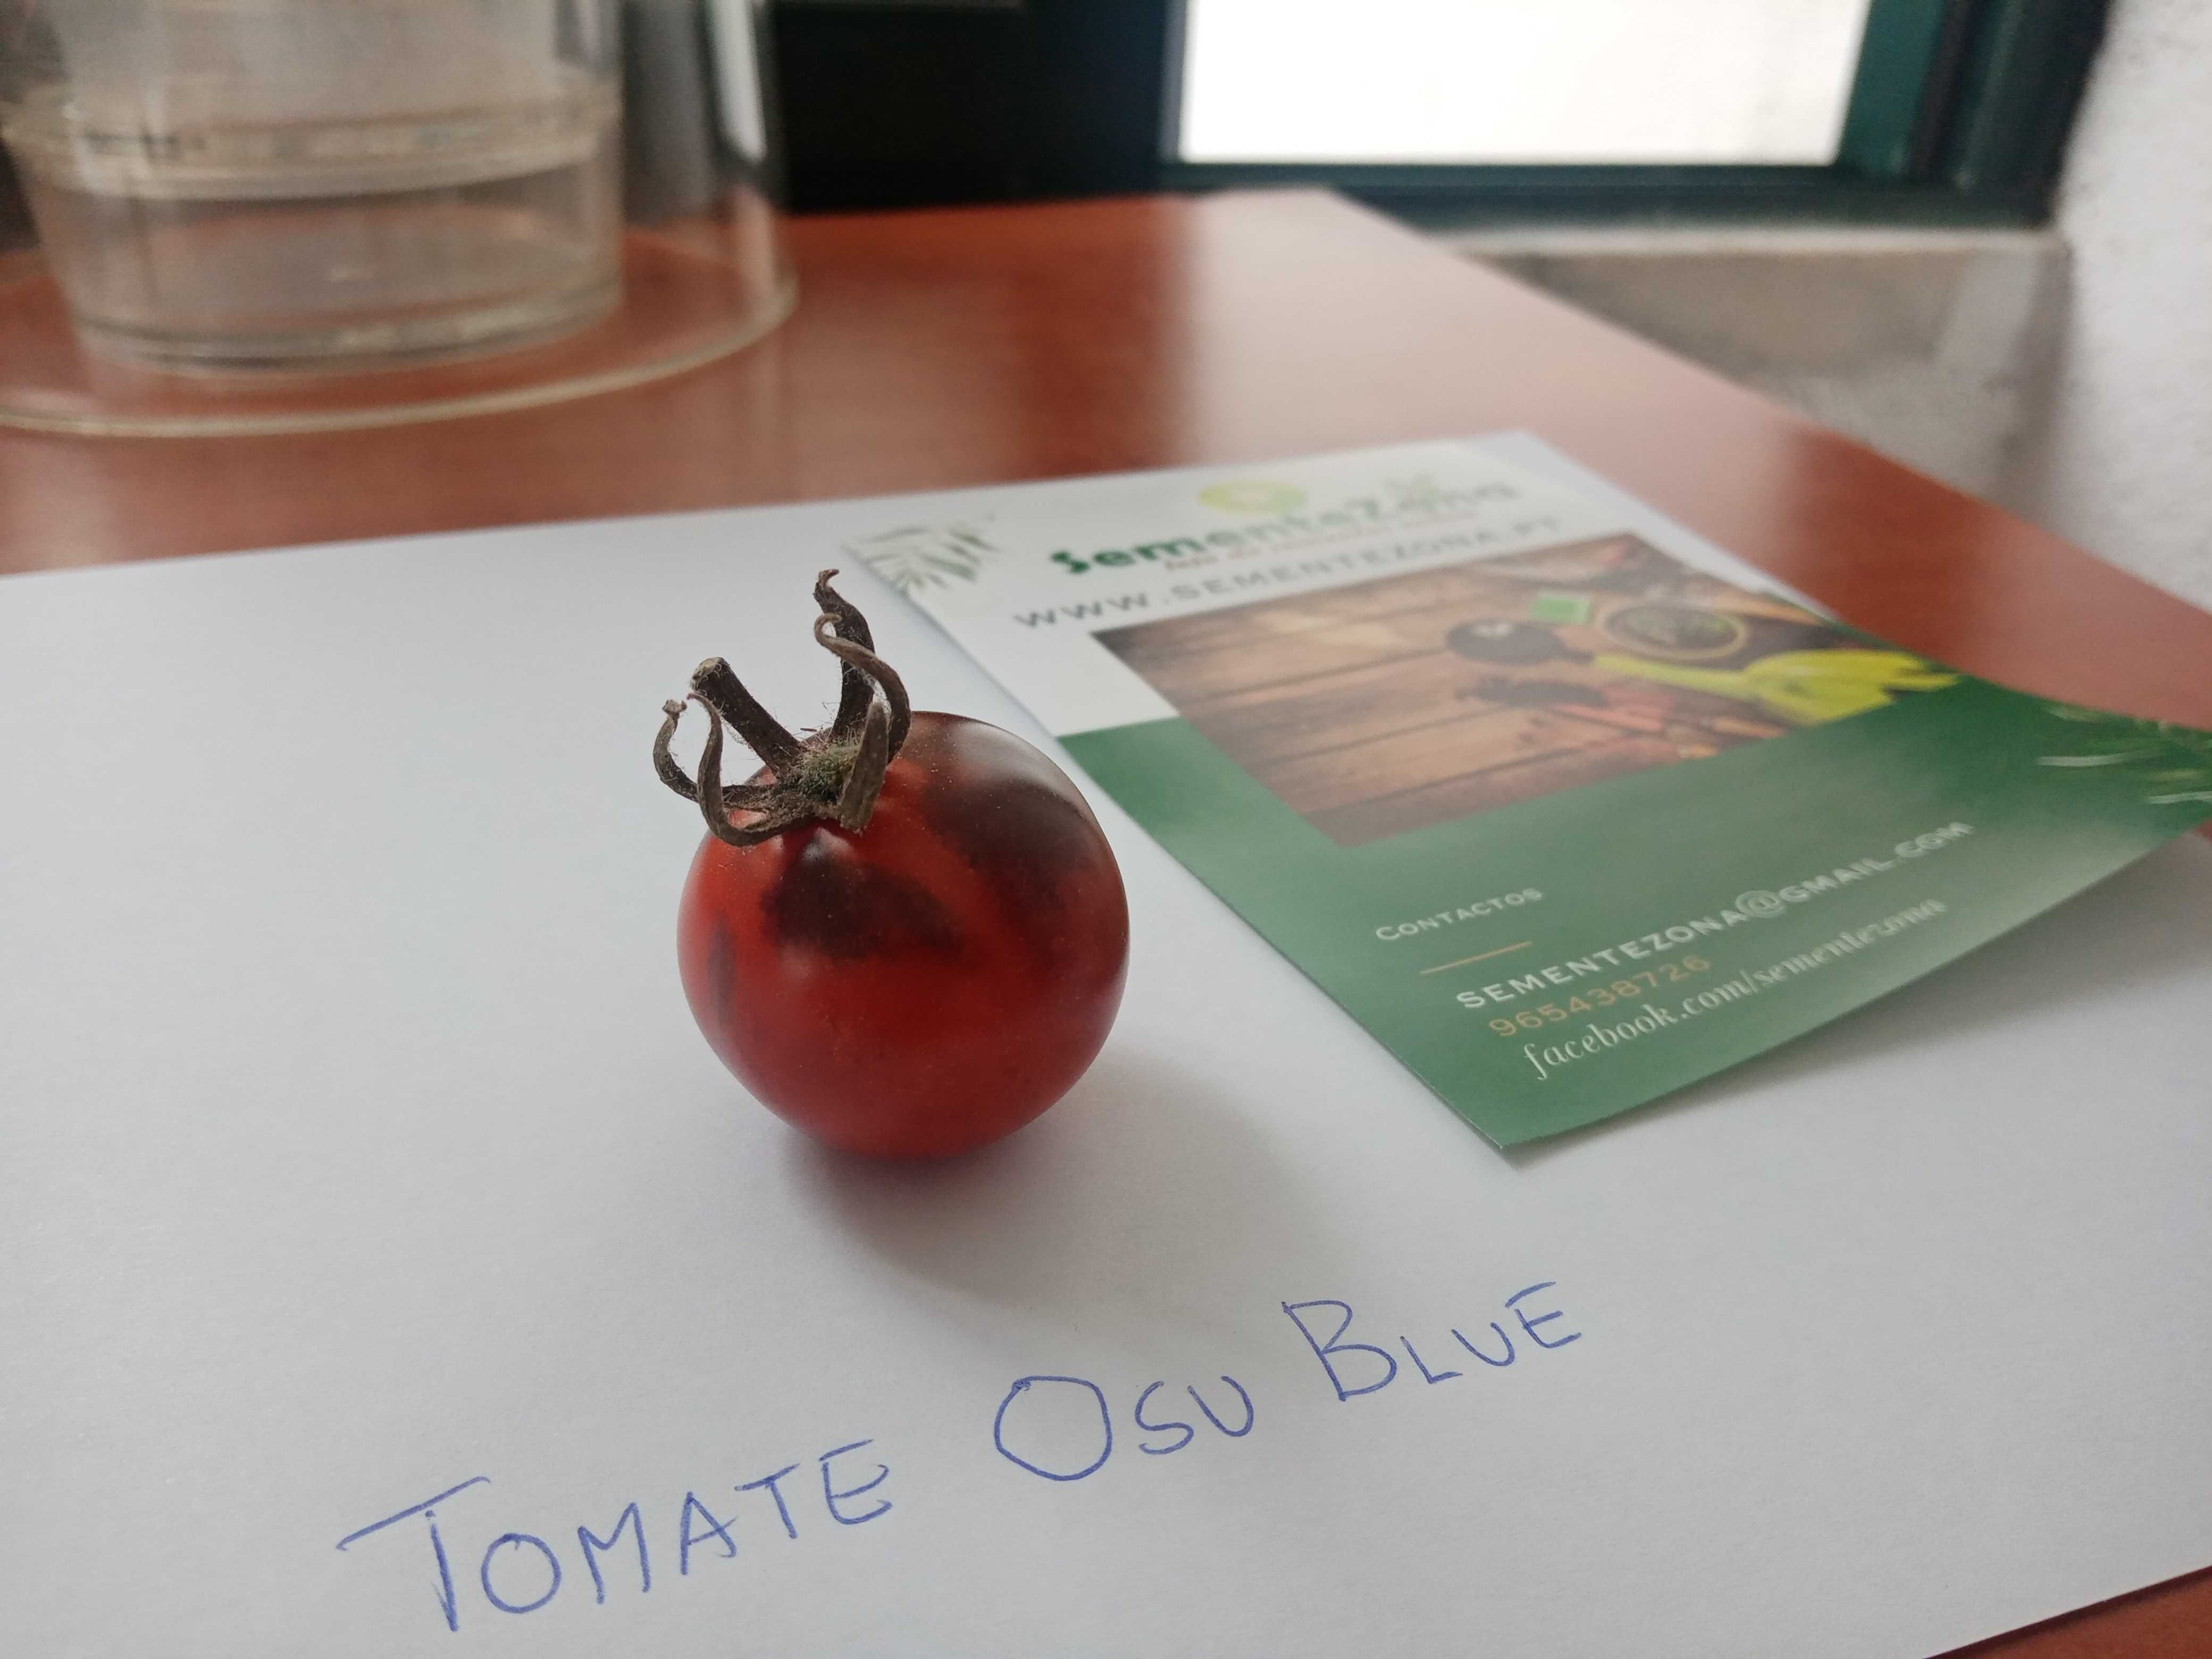 Tomate Osu Blue Sementes Variedade Rara